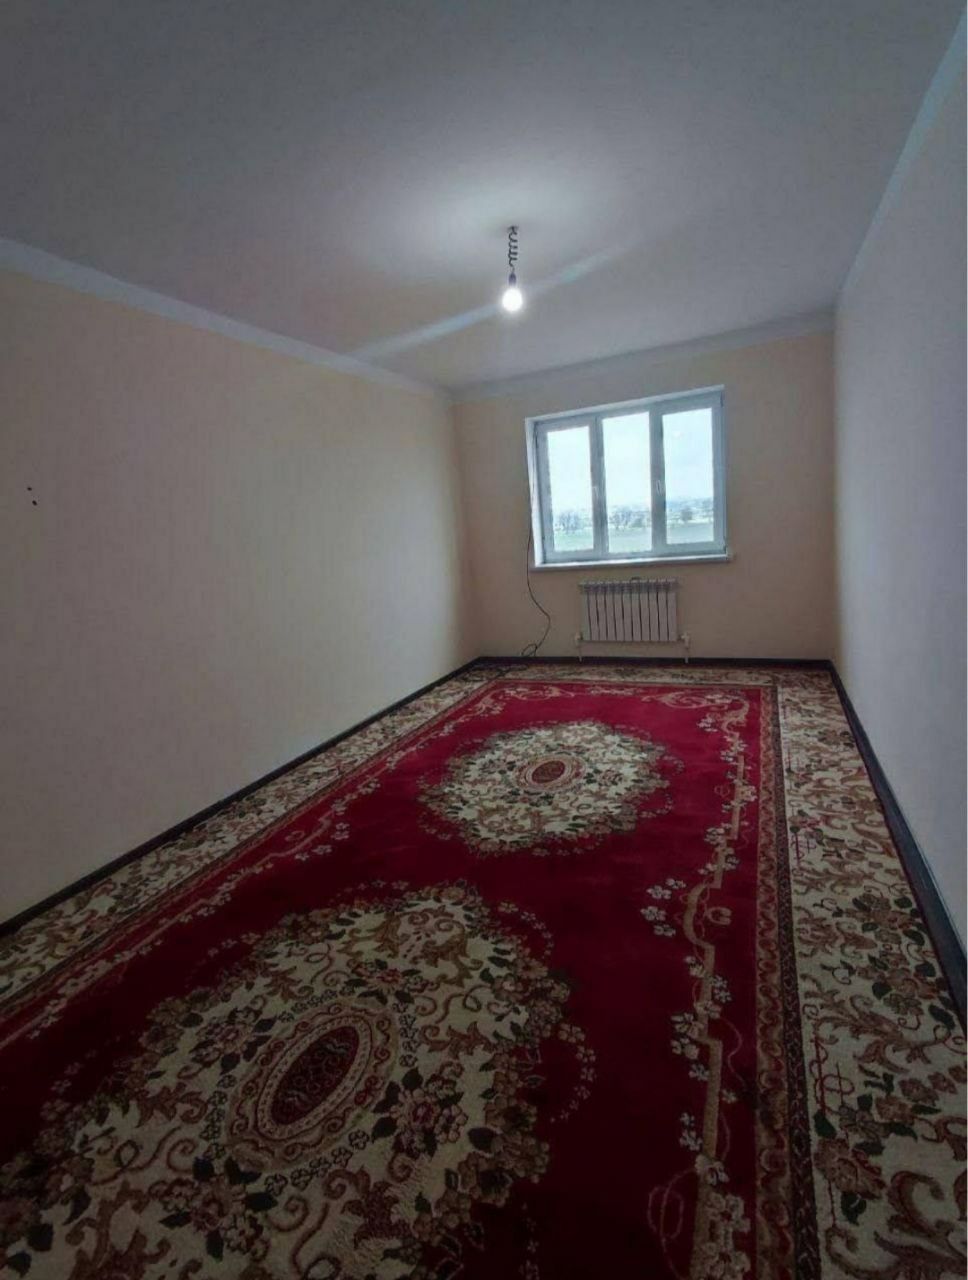 Продам квартиру в Корасув от собственника, без риелтора и комиссии!